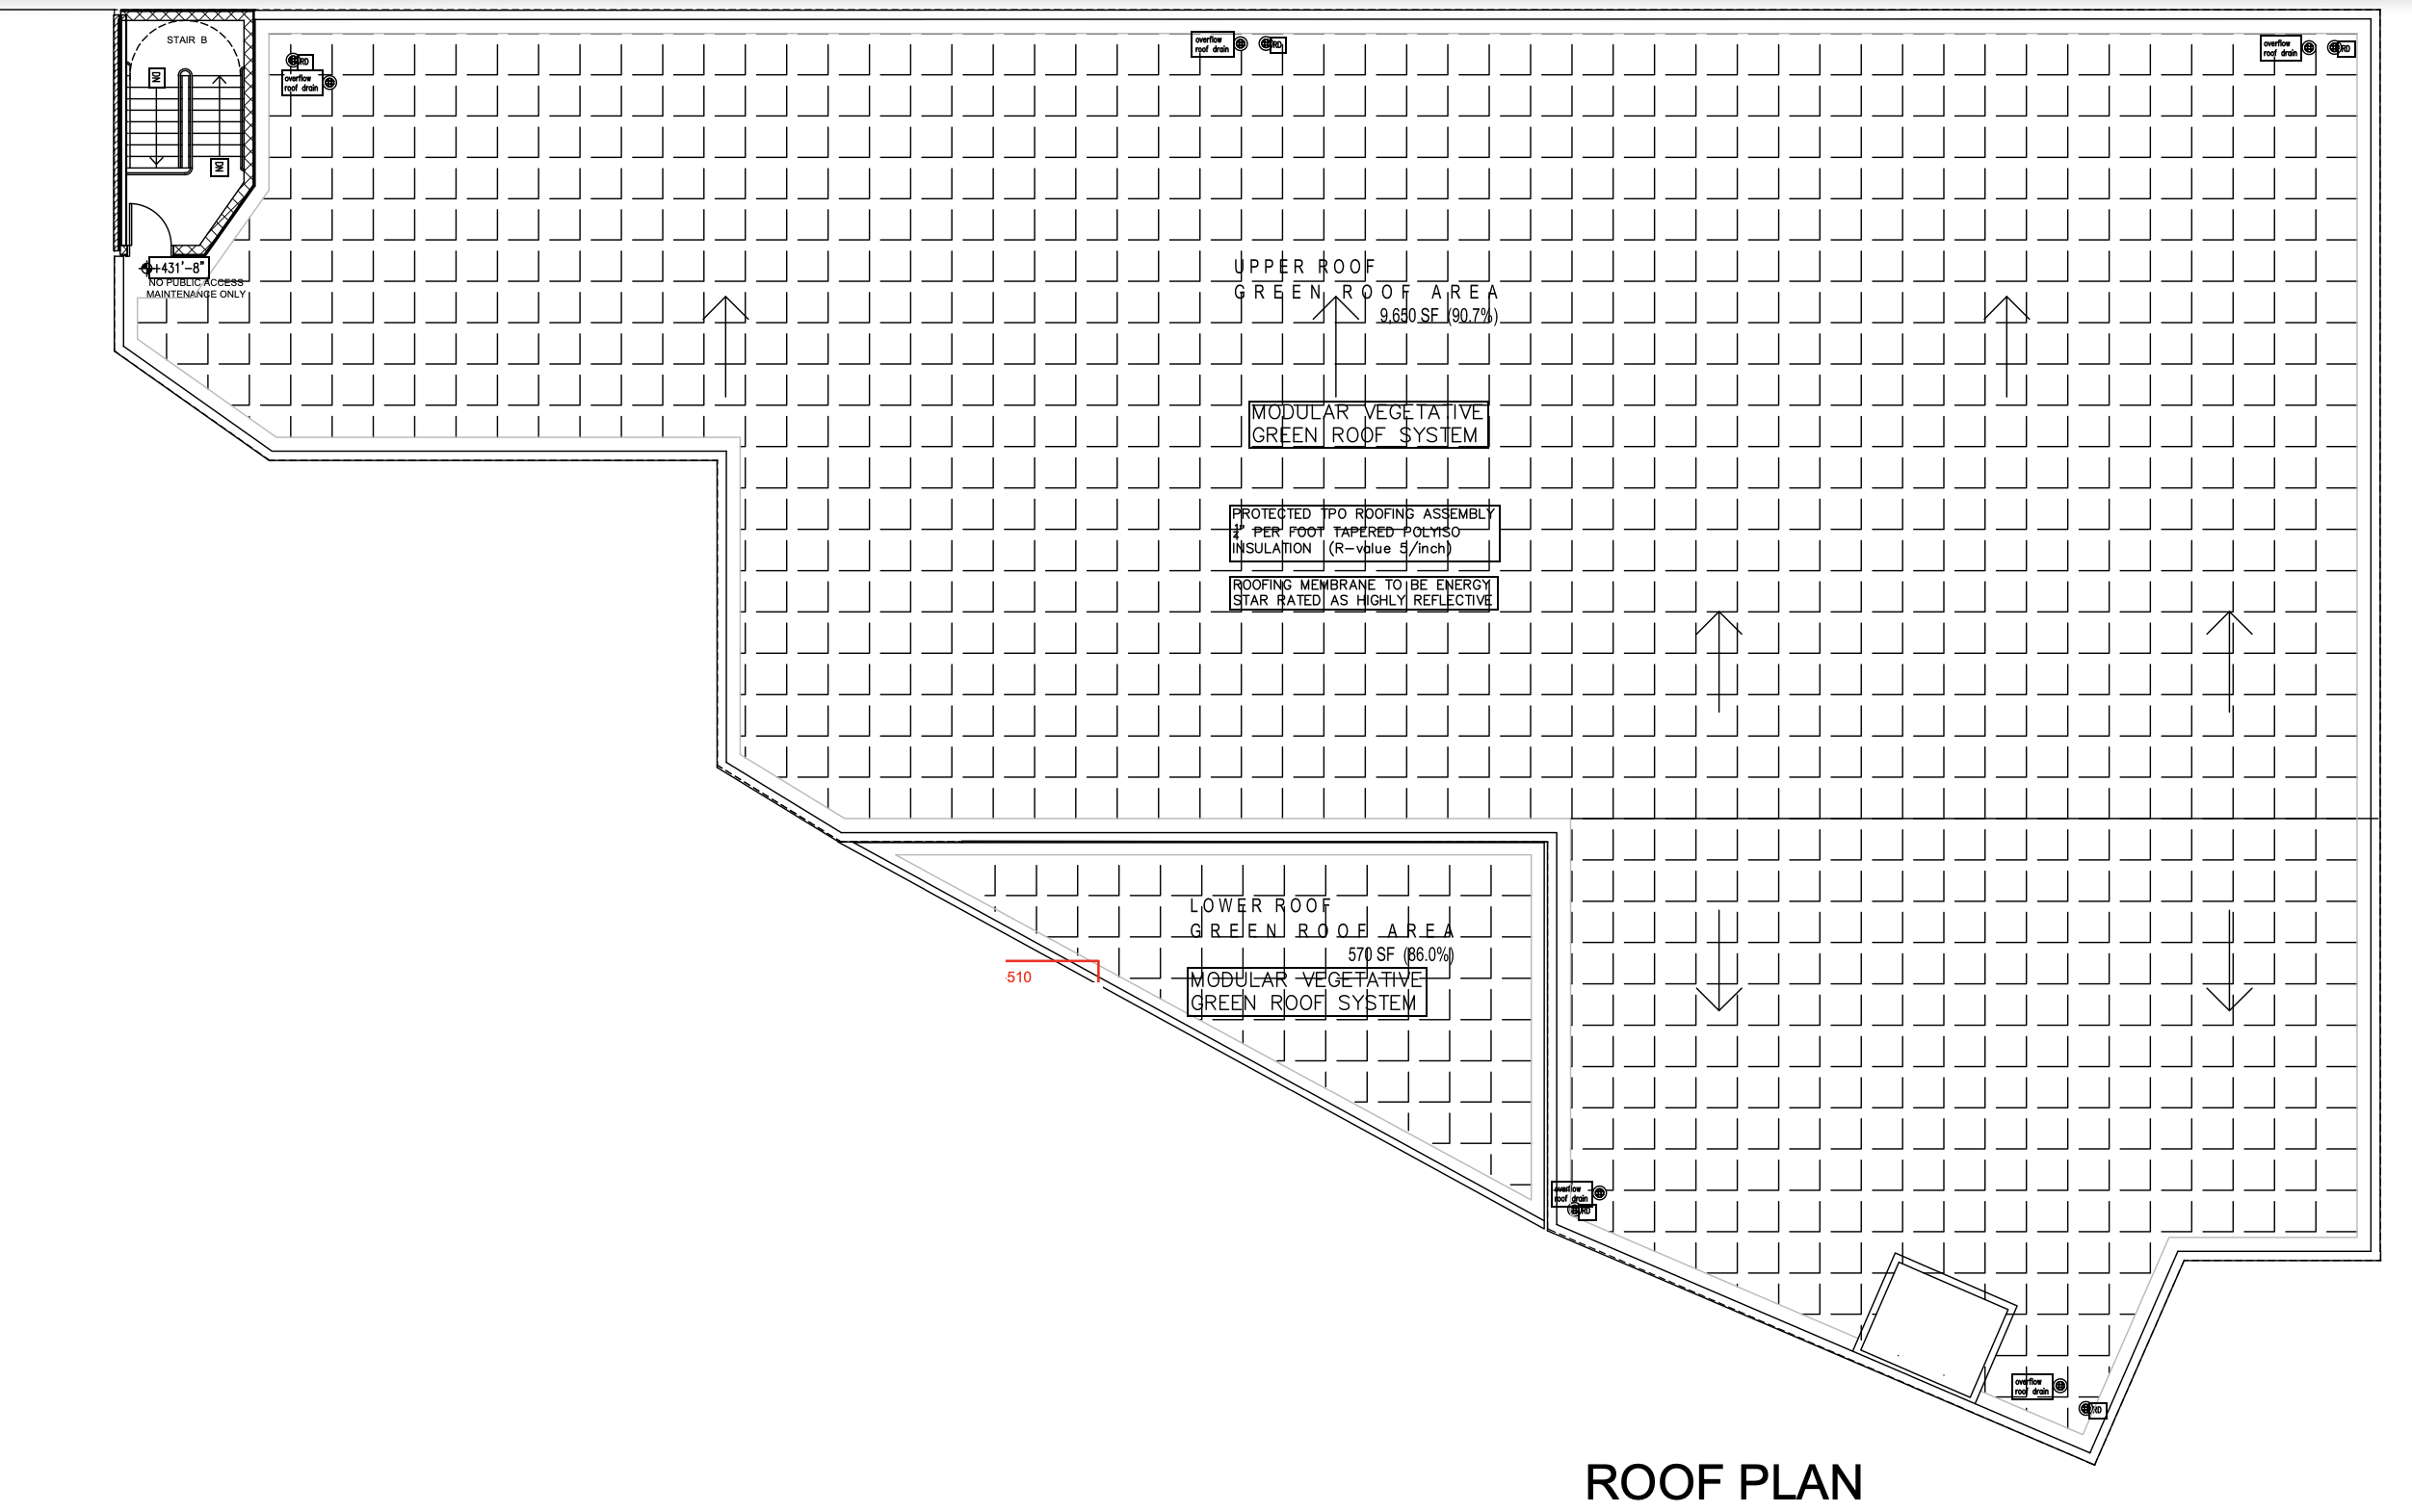 8327 Ridge Avenue Roof Plan